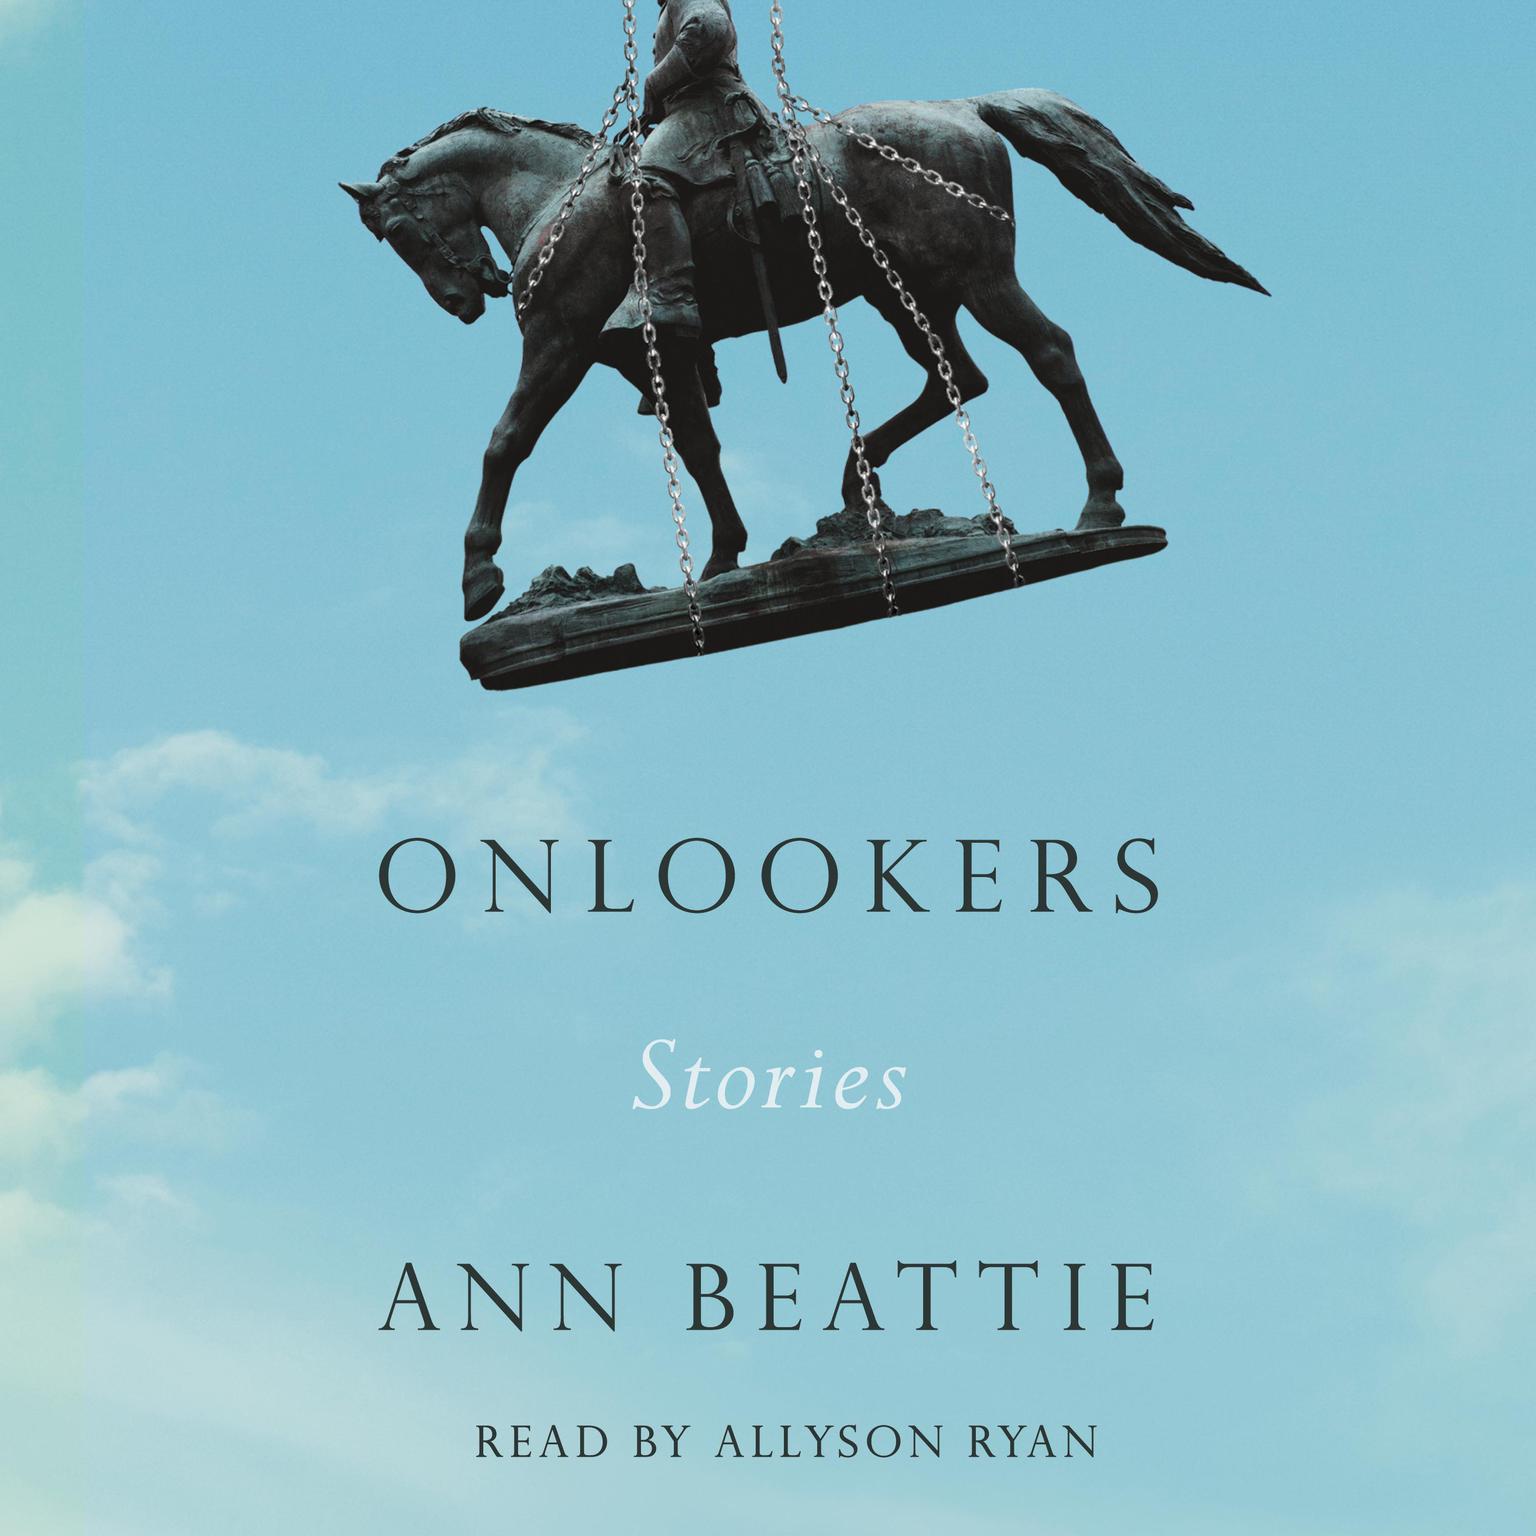 Onlookers: Stories Audiobook, by Ann Beattie